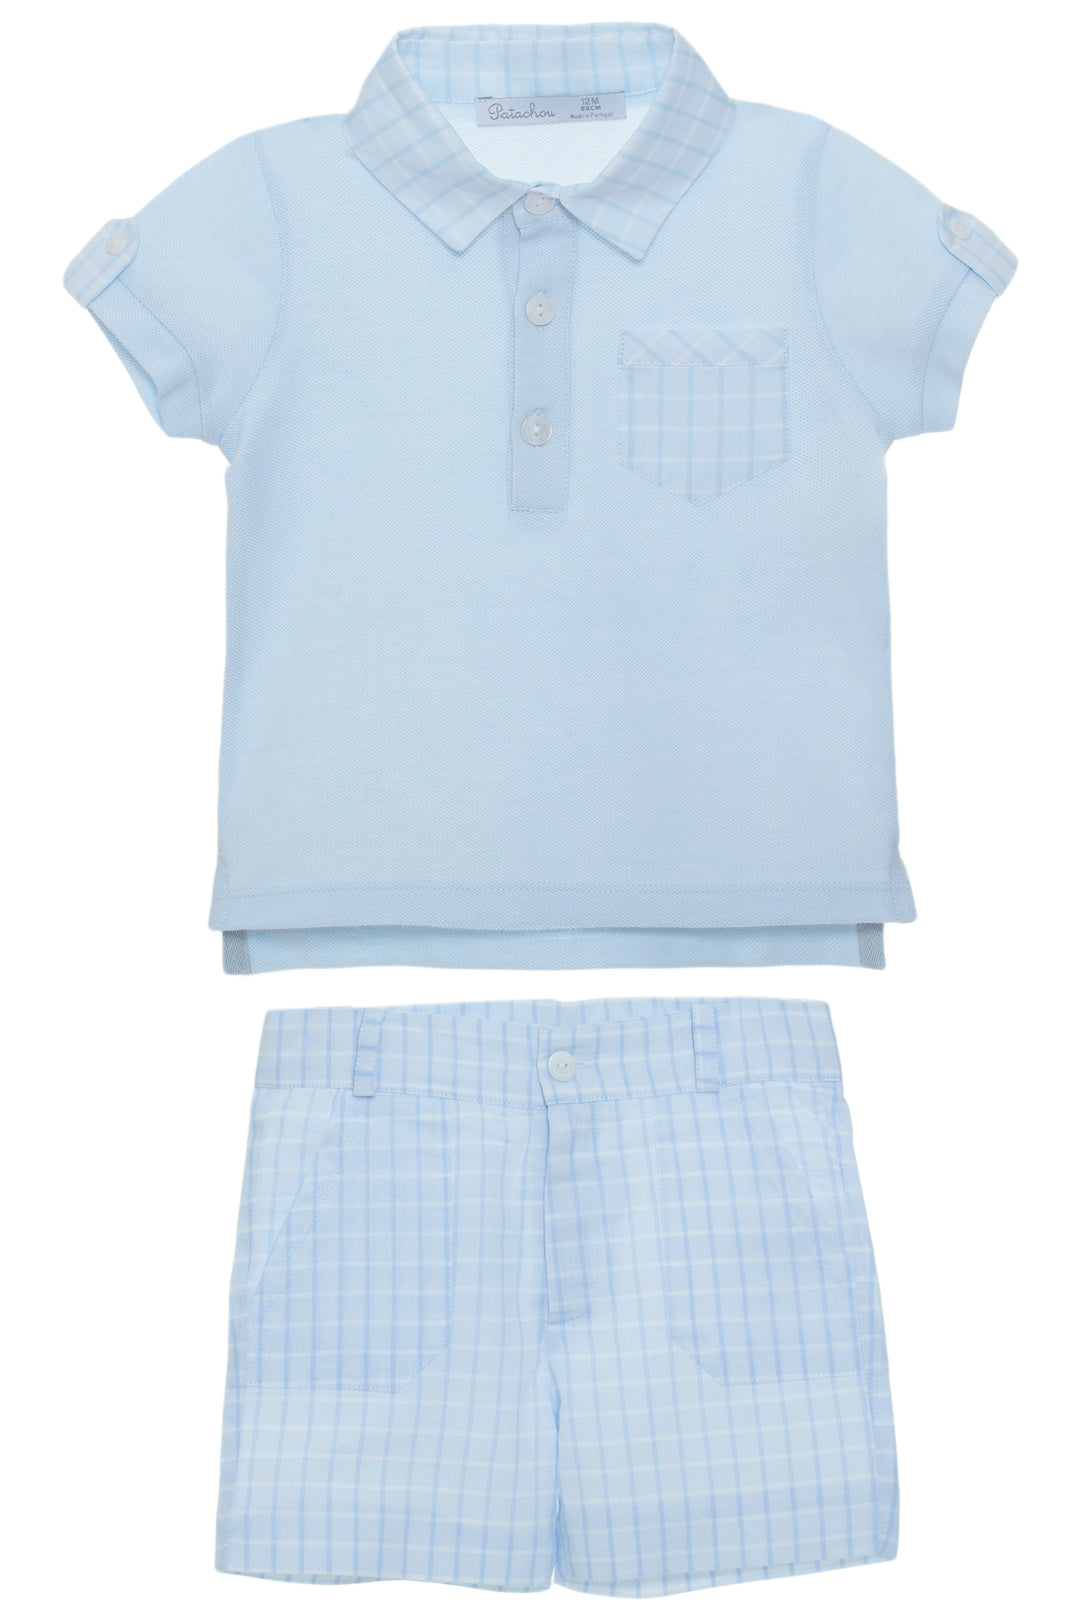 Patachou "Travis" Blue Polo Shirt & Shorts | Millie and John